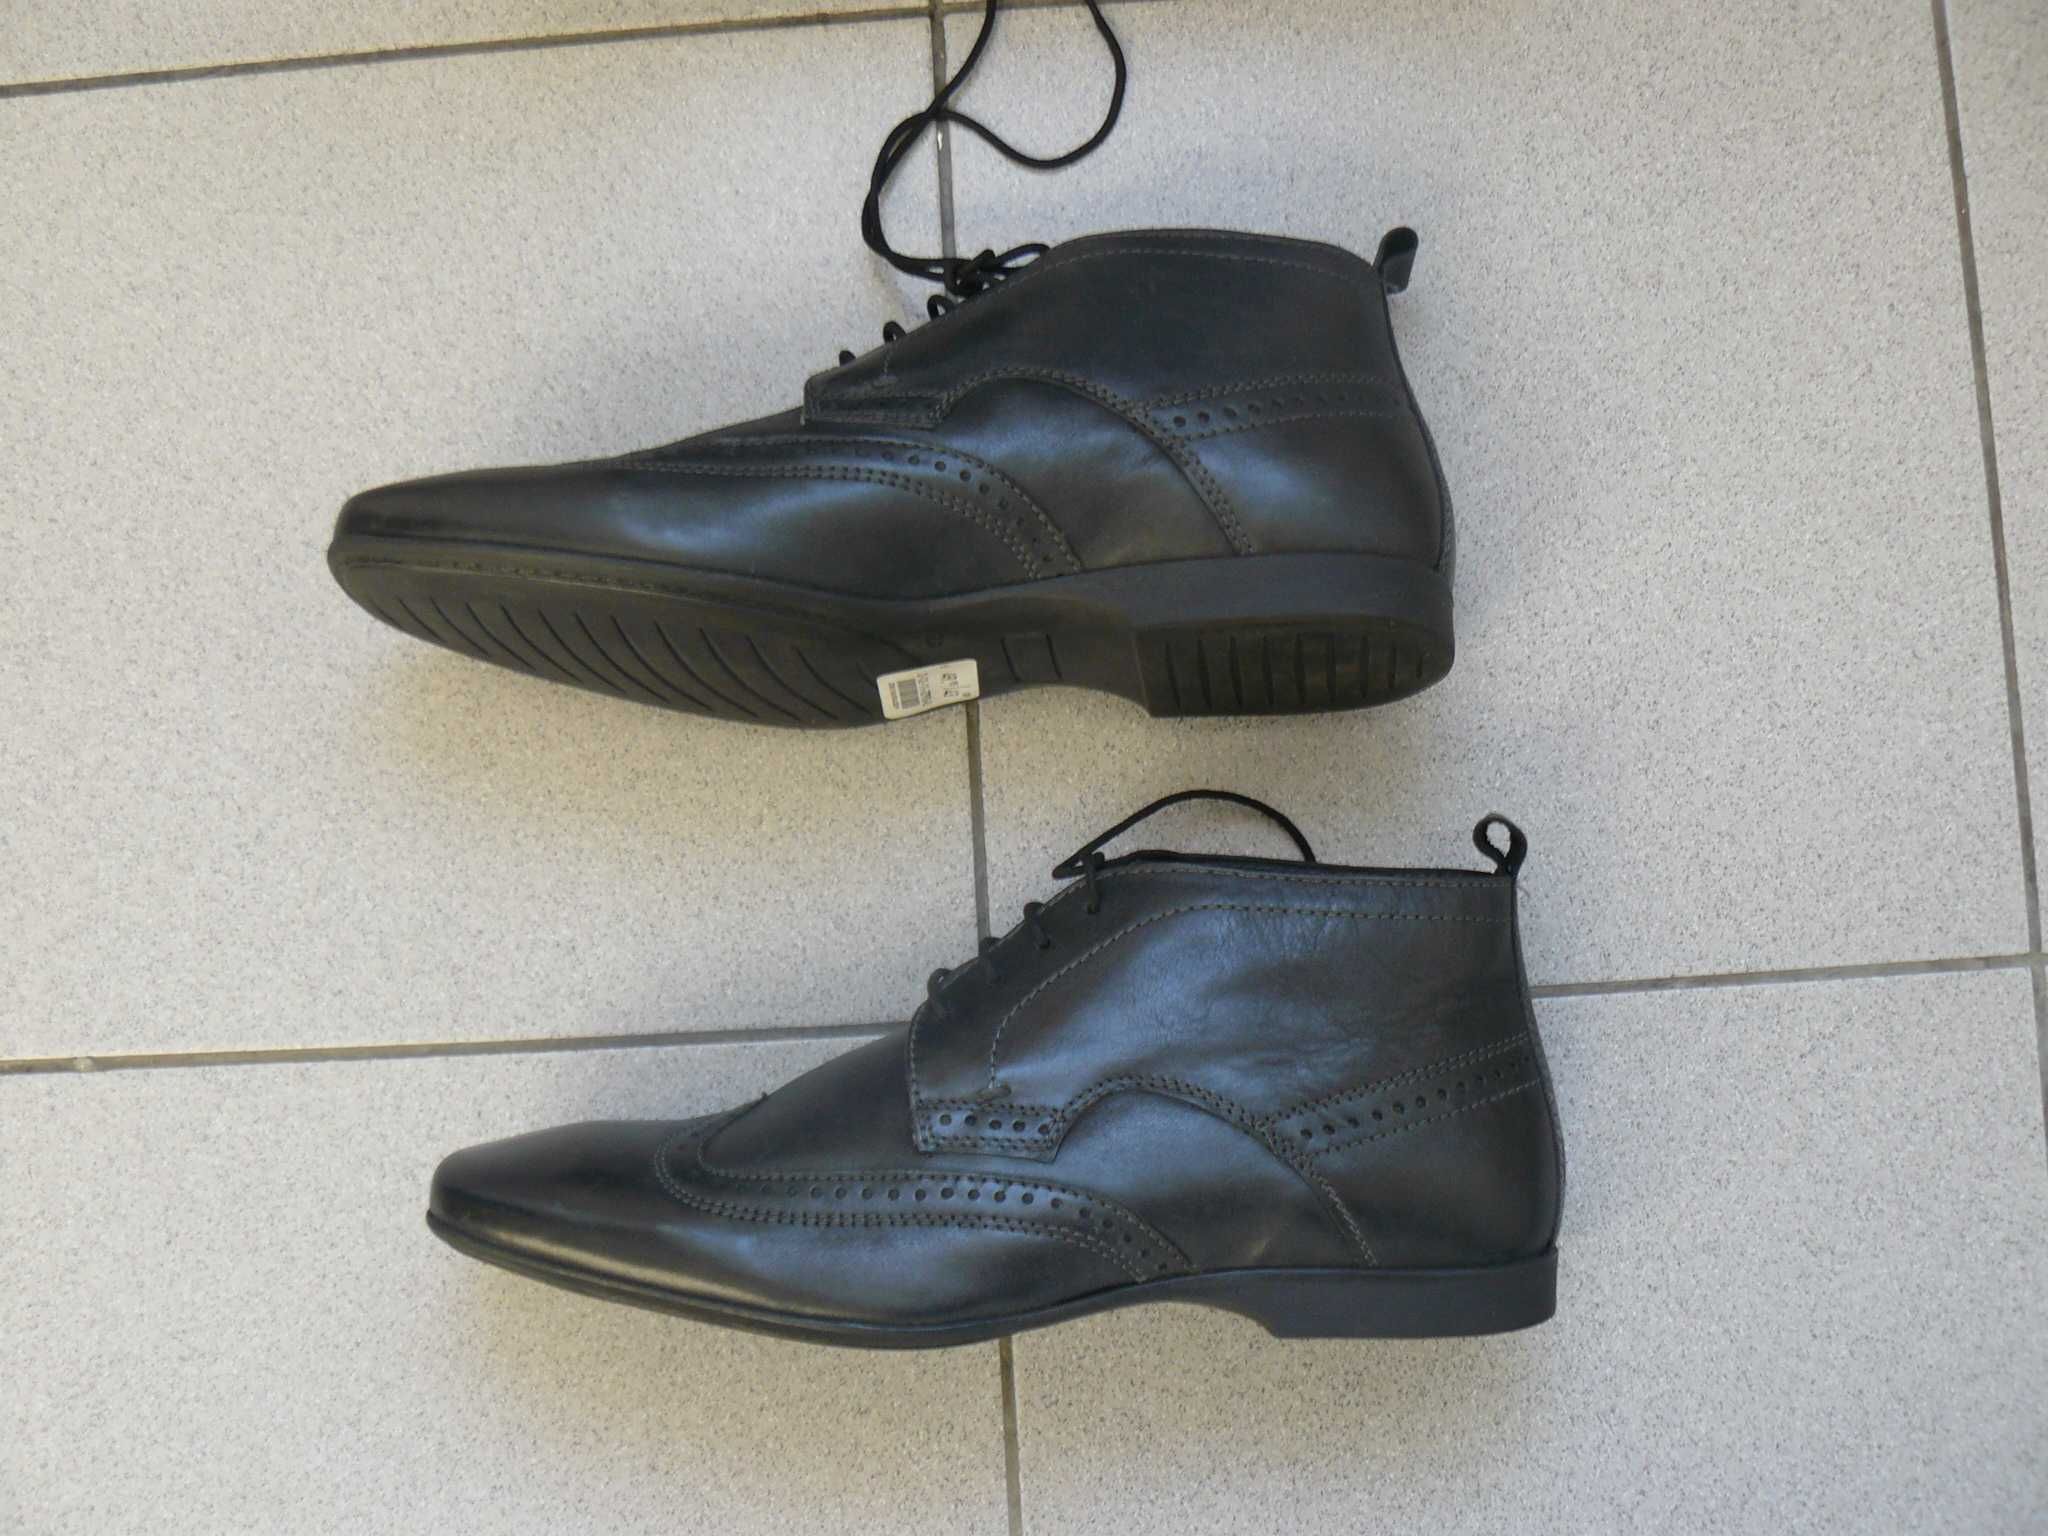 Pantofi/Ghete Barbati SKY LINE Piele Naturala,Marime 43,Negri, Austria